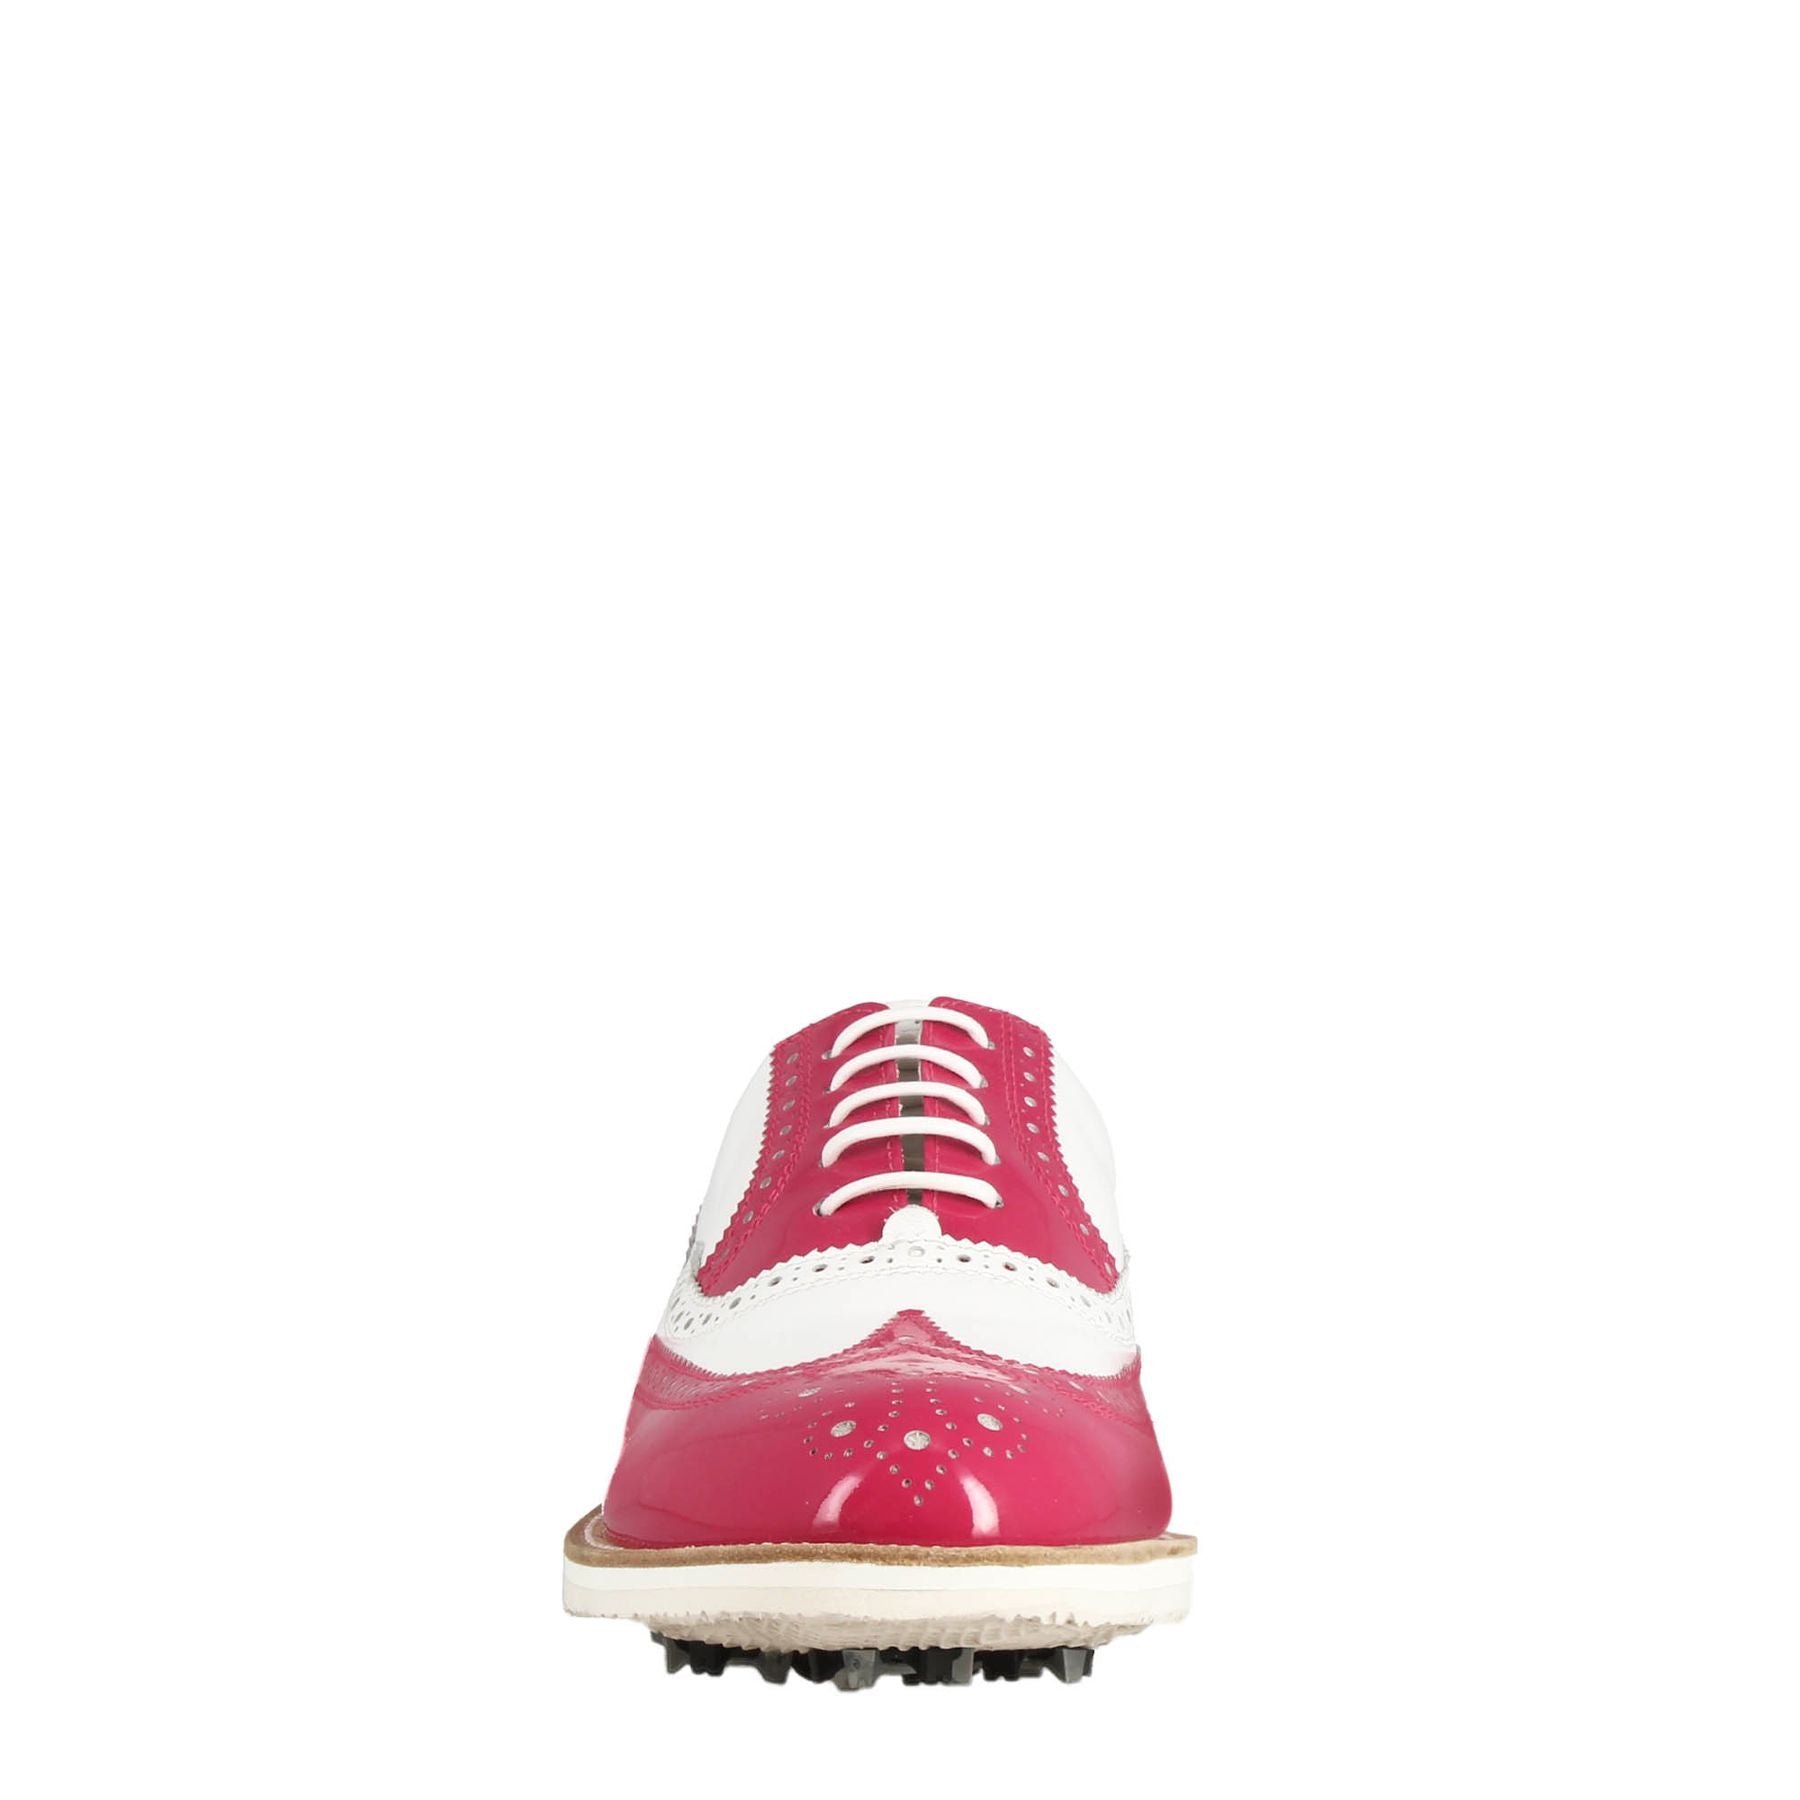 Handgefertigte Damen-Golfschuhe aus glänzendem weiß-rosa Leder